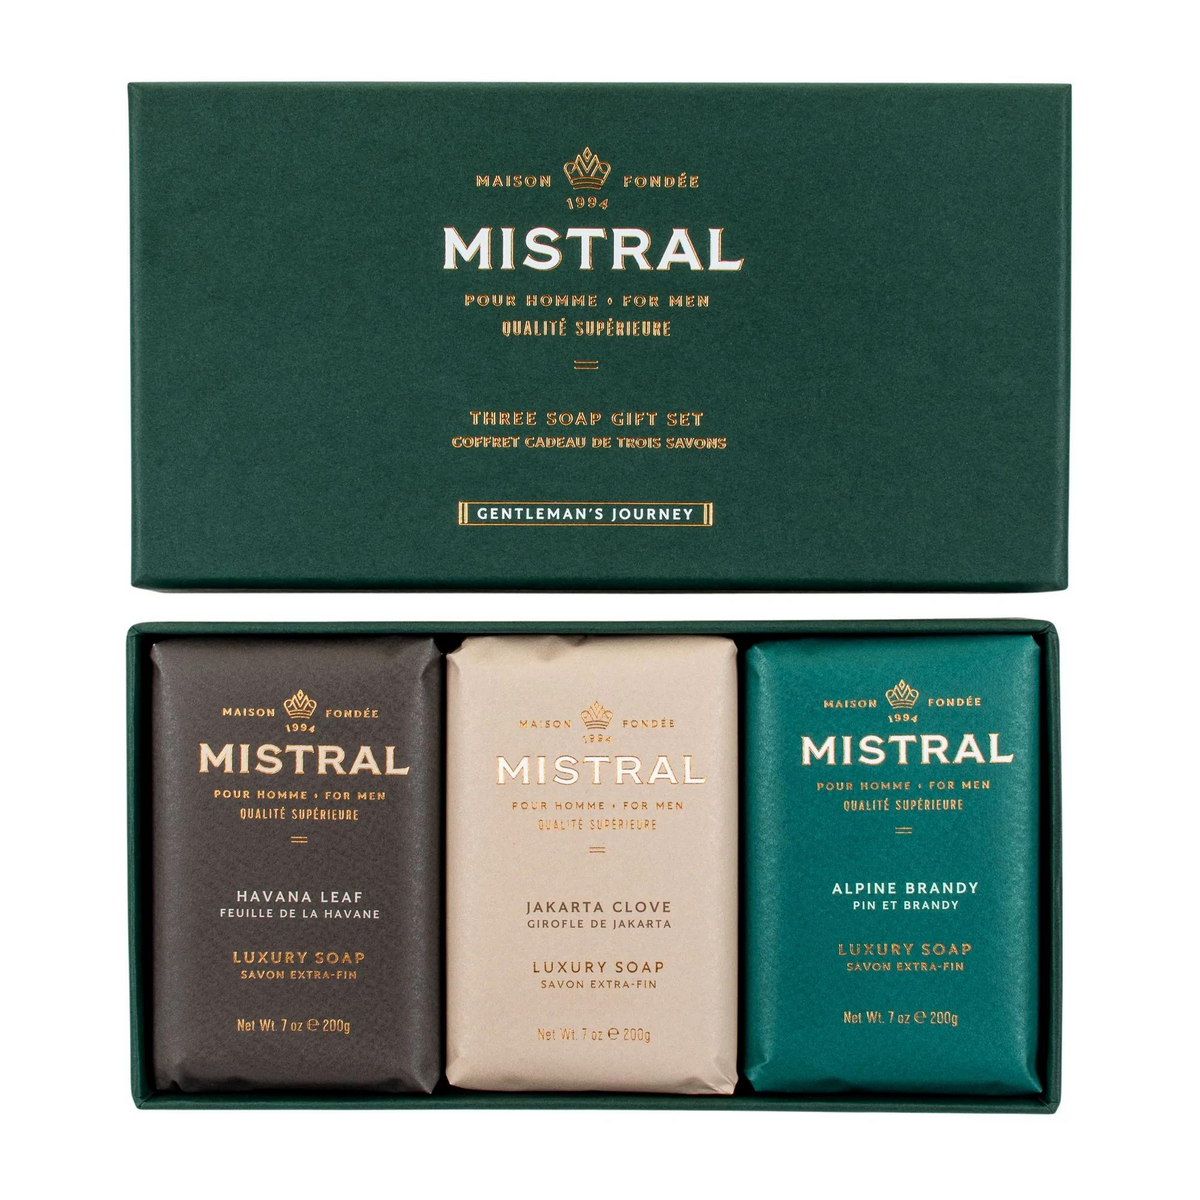 Primary Image of Mistral Gentleman's Journey Bar Soap Gift Set (3 x 7 oz)